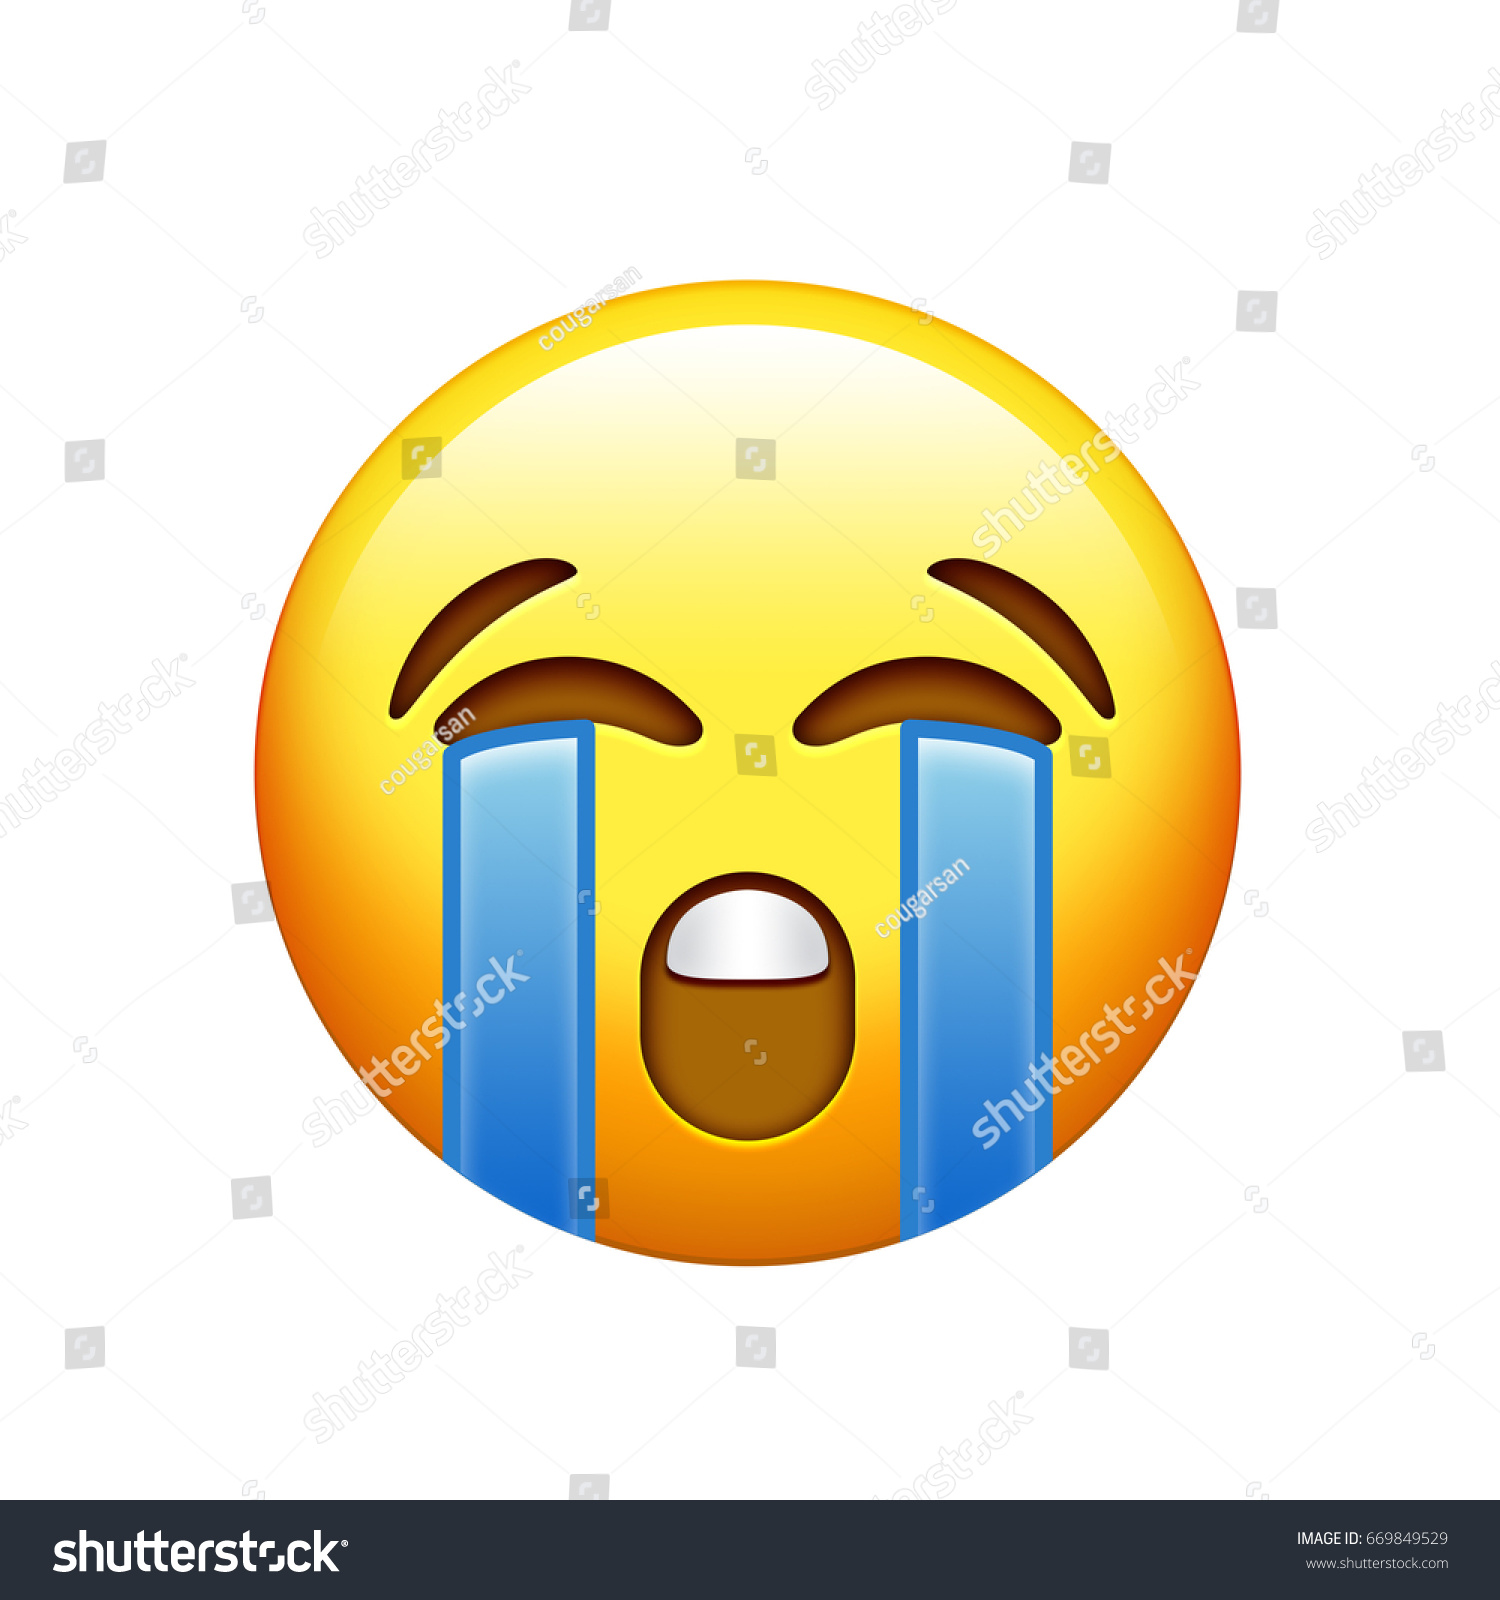 Emoji Yellow Unhappy Face Crying Tear Stock Illustration 669849529